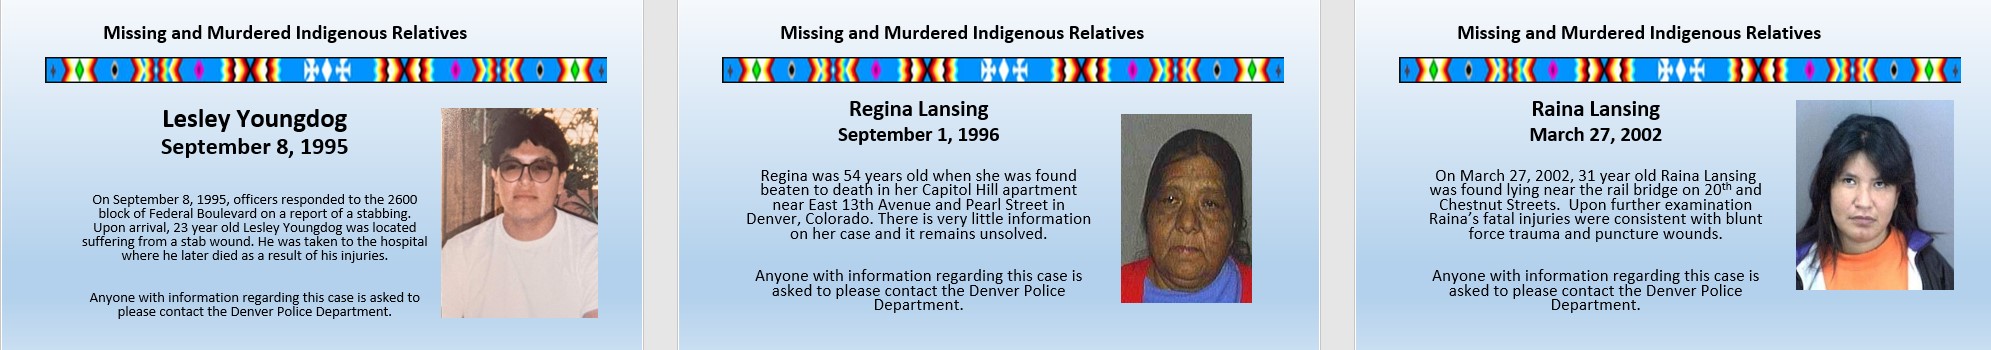 Pictures of three Murdered Indigenous persons Lesley Youngdog, Regina Lansing, Raina Lansing